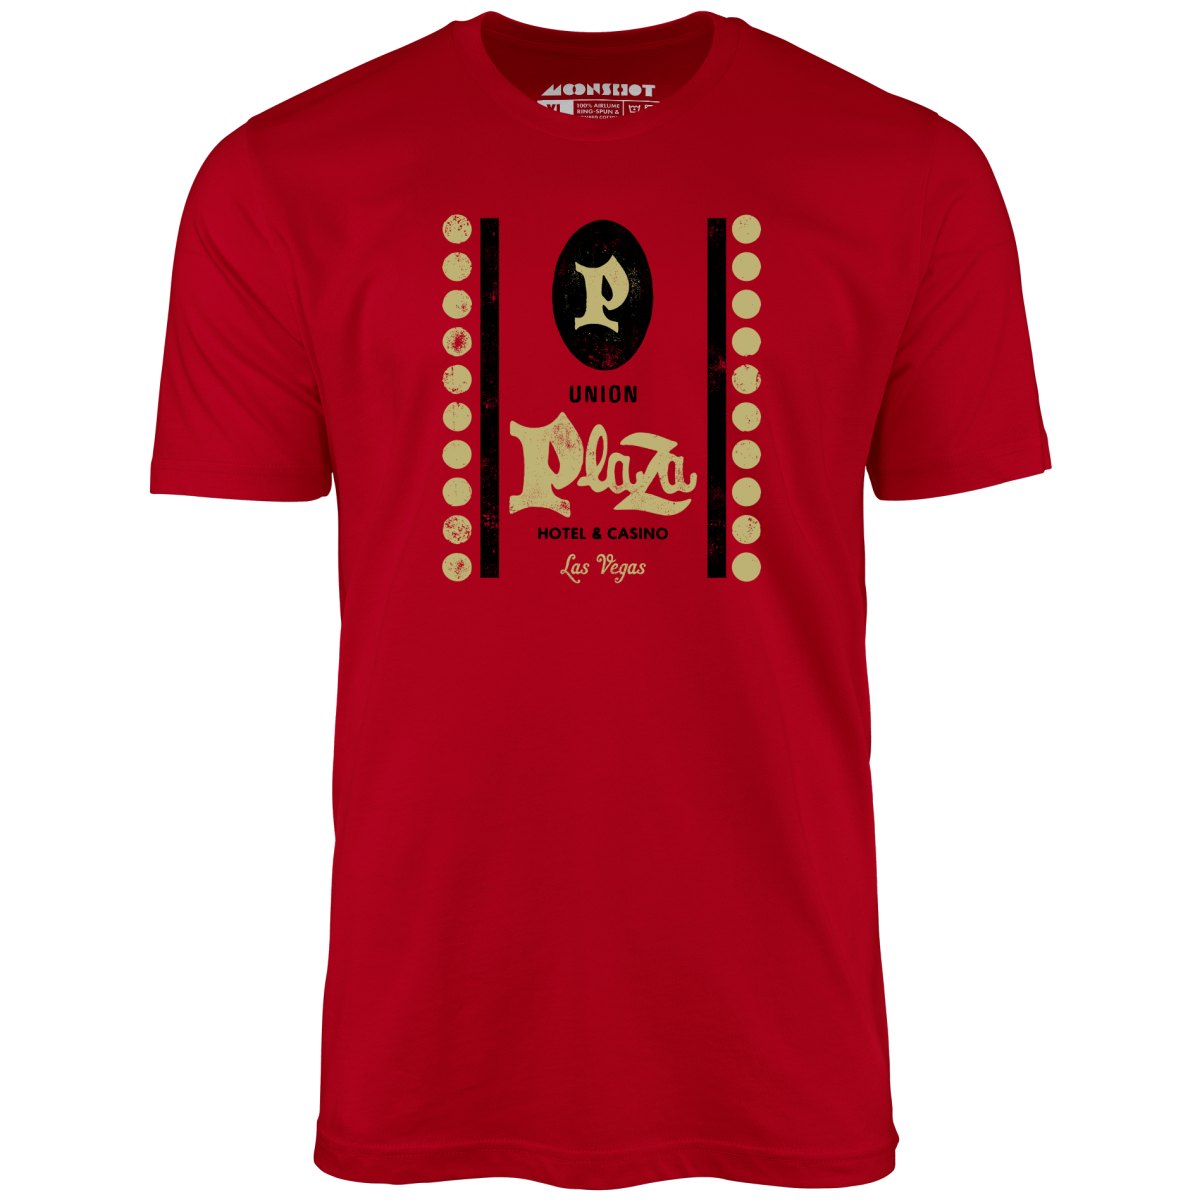 Union Plaza Hotel & Casino - Vintage Las Vegas - Unisex T-Shirt